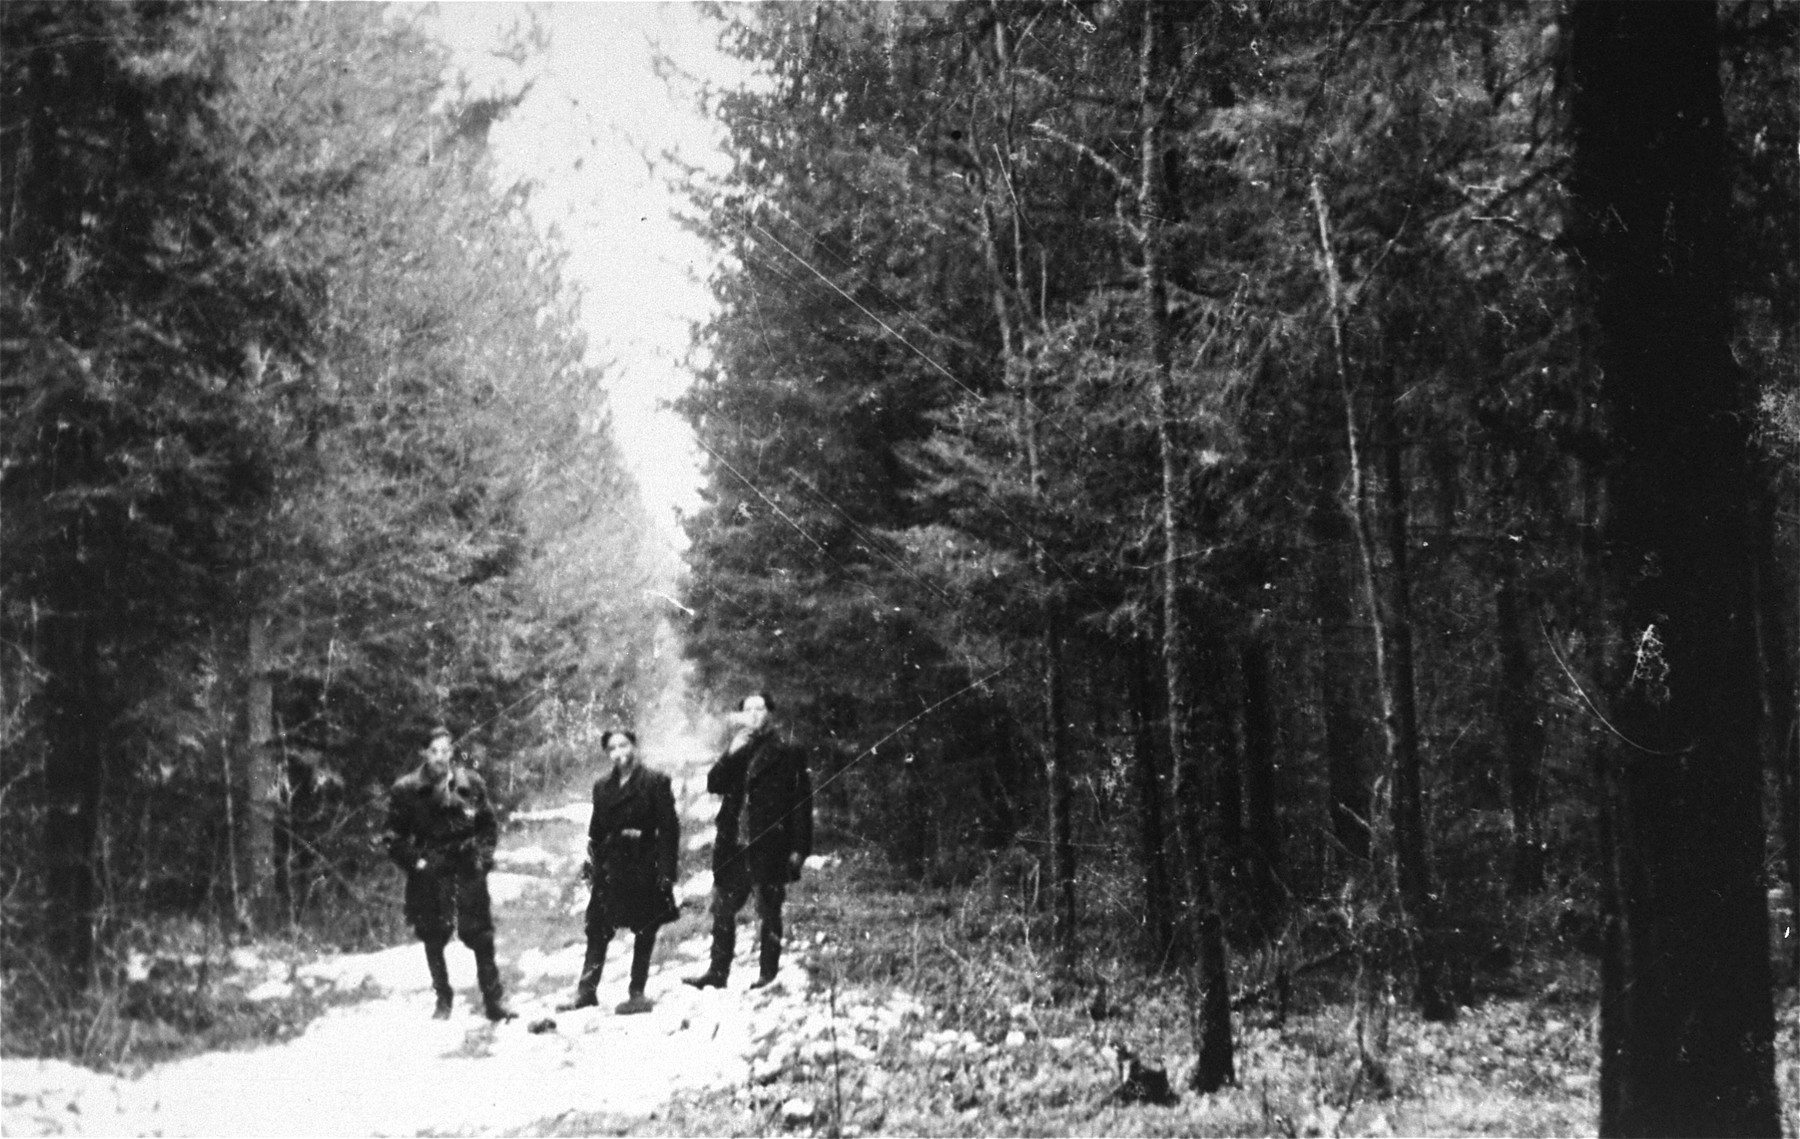 Three Jewish partisans, Gabriel Prushchek, Jakub Puttermilch, and Janek Blelak, photographed in the Wyszków forest